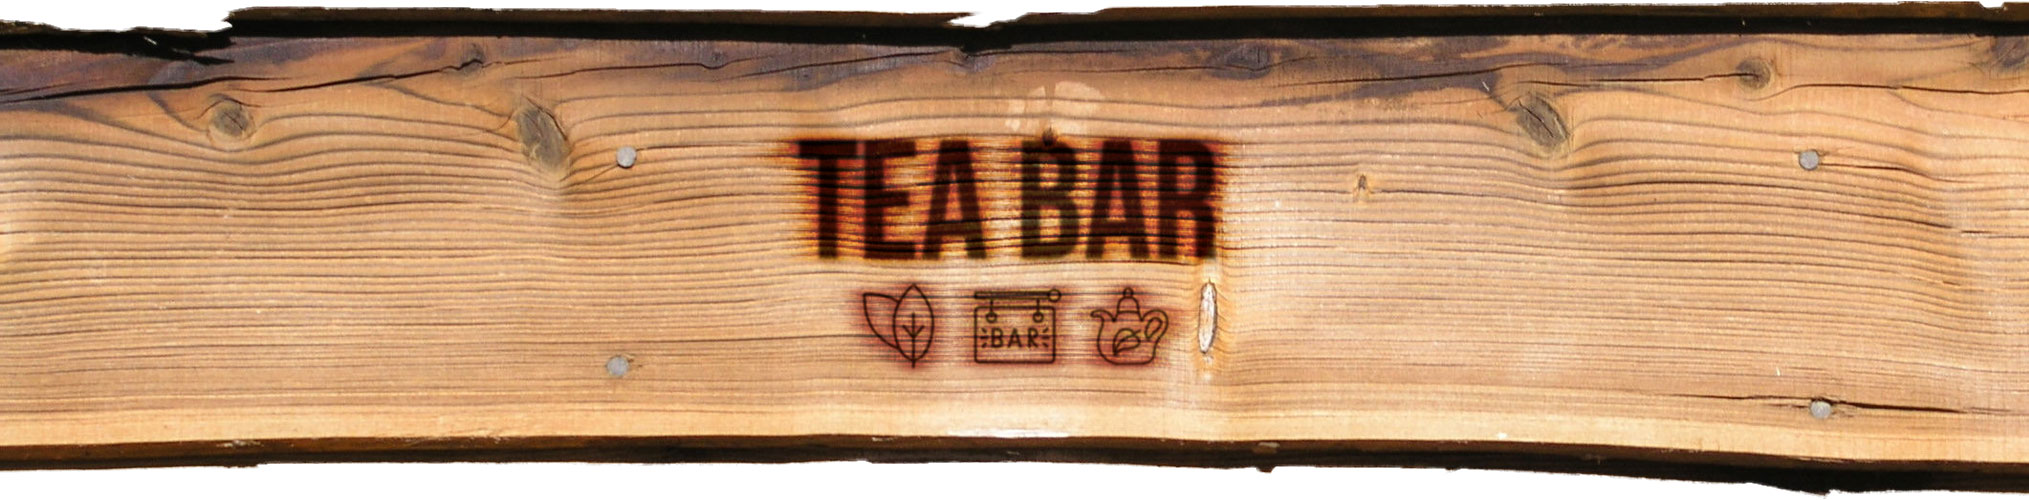 Tea Bar Has Landed!